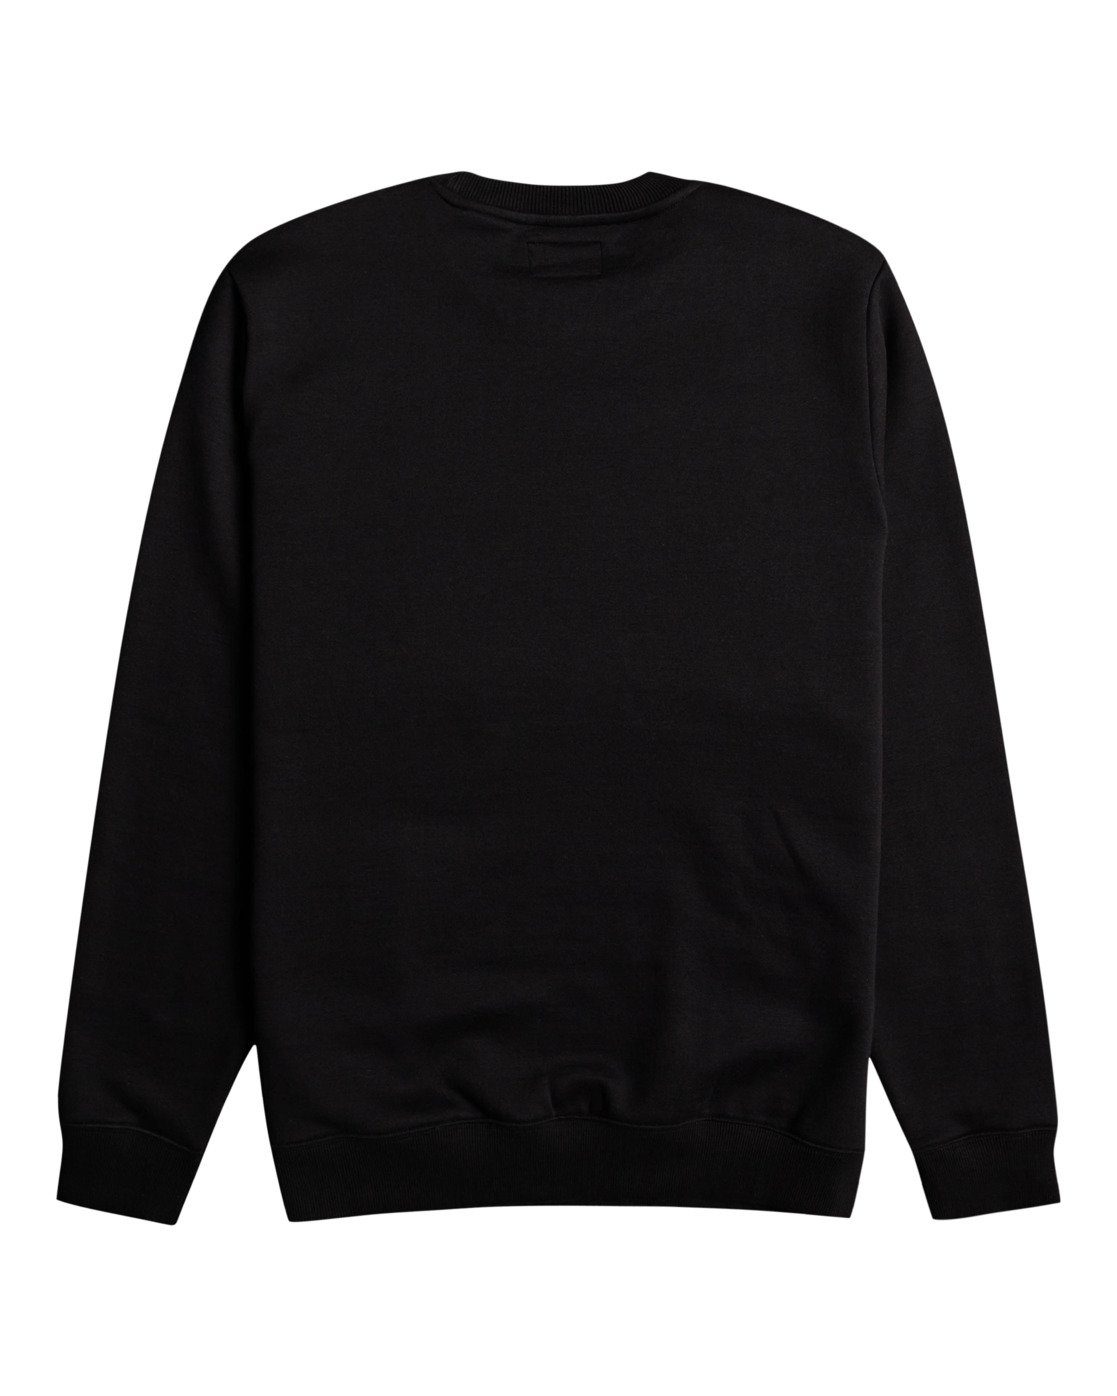 Billabong Sweatshirt Arch Black